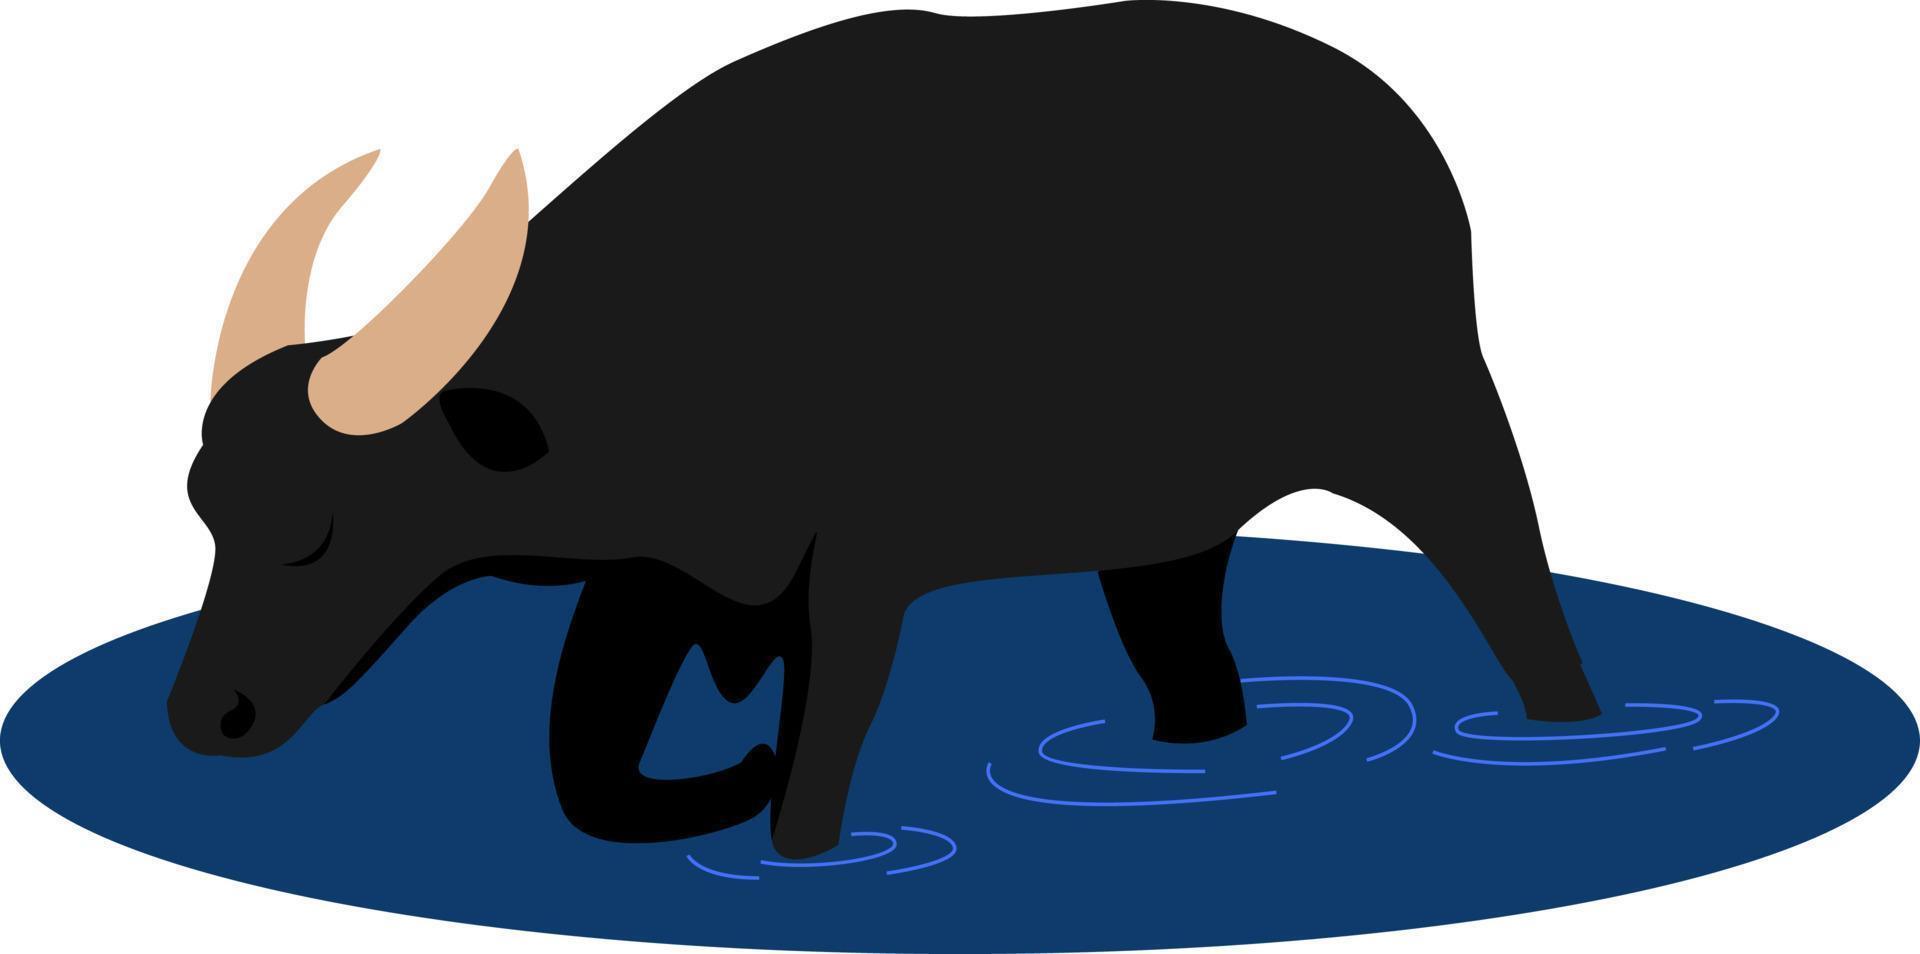 Black cow, illustration, vector on white background.